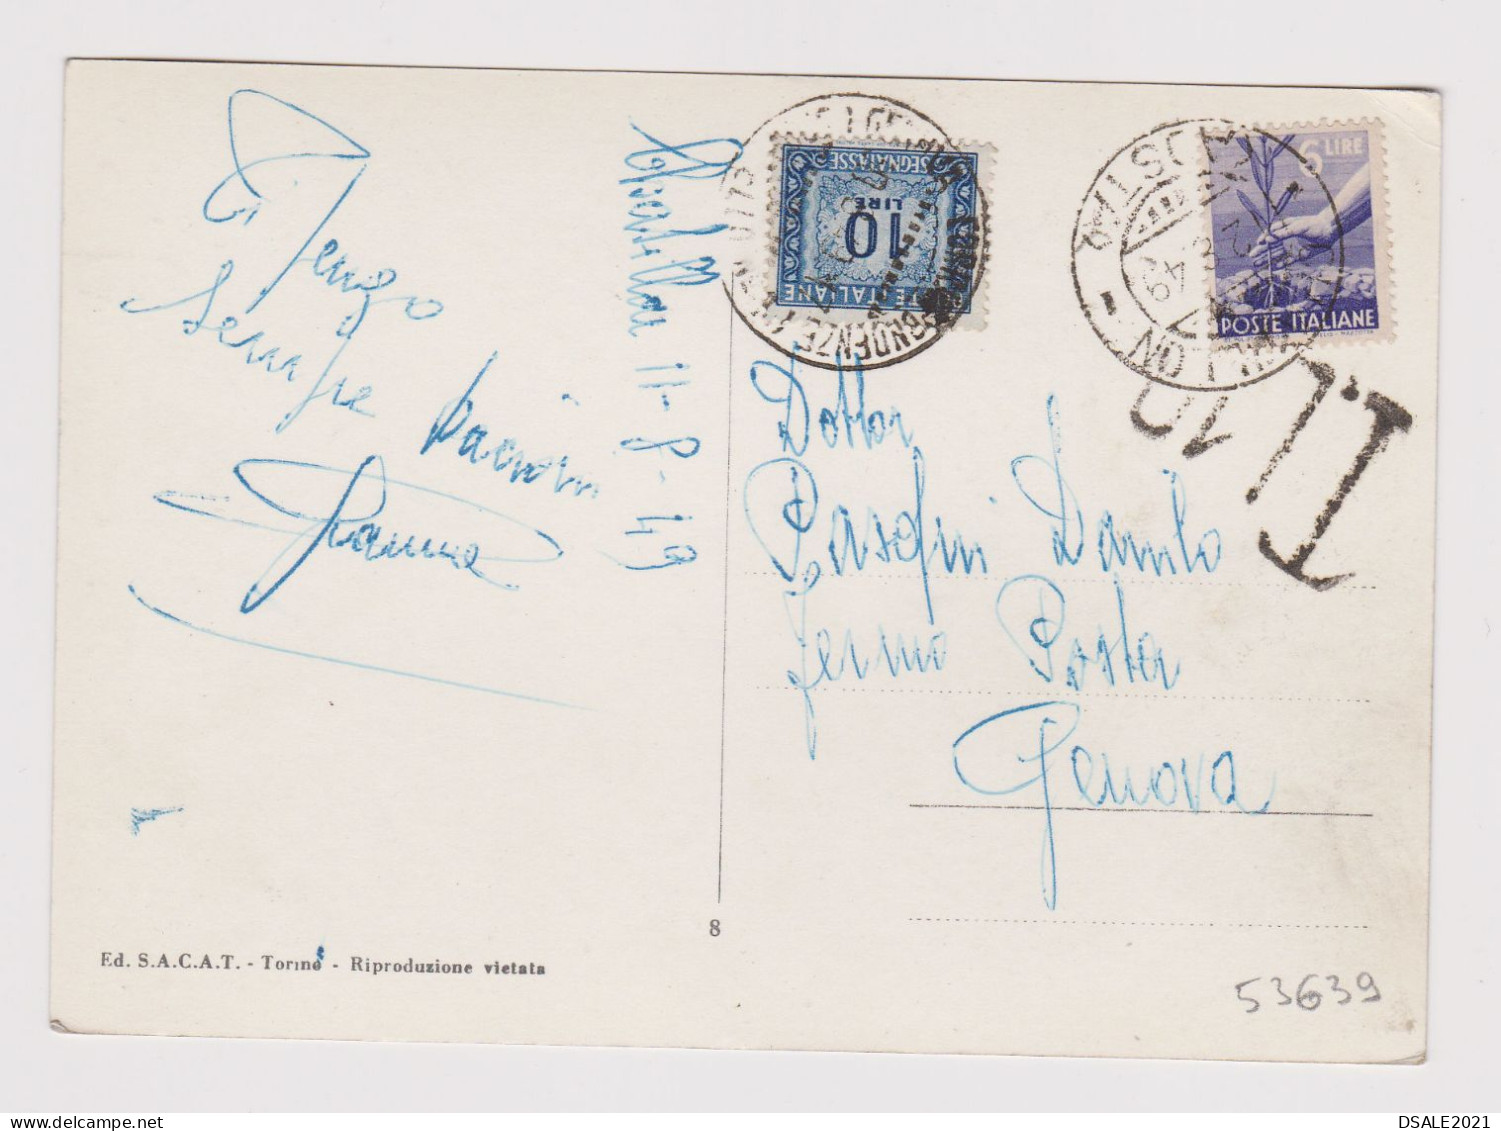 ITALY 1949 Pc W/6Lire Stamp AOSTA To GENOVA Postage Due 10Lire, Postcard St. VINCENT M.575 PIAZZALE DELLA FONTE /53639 - 1946-60: Marcofilie